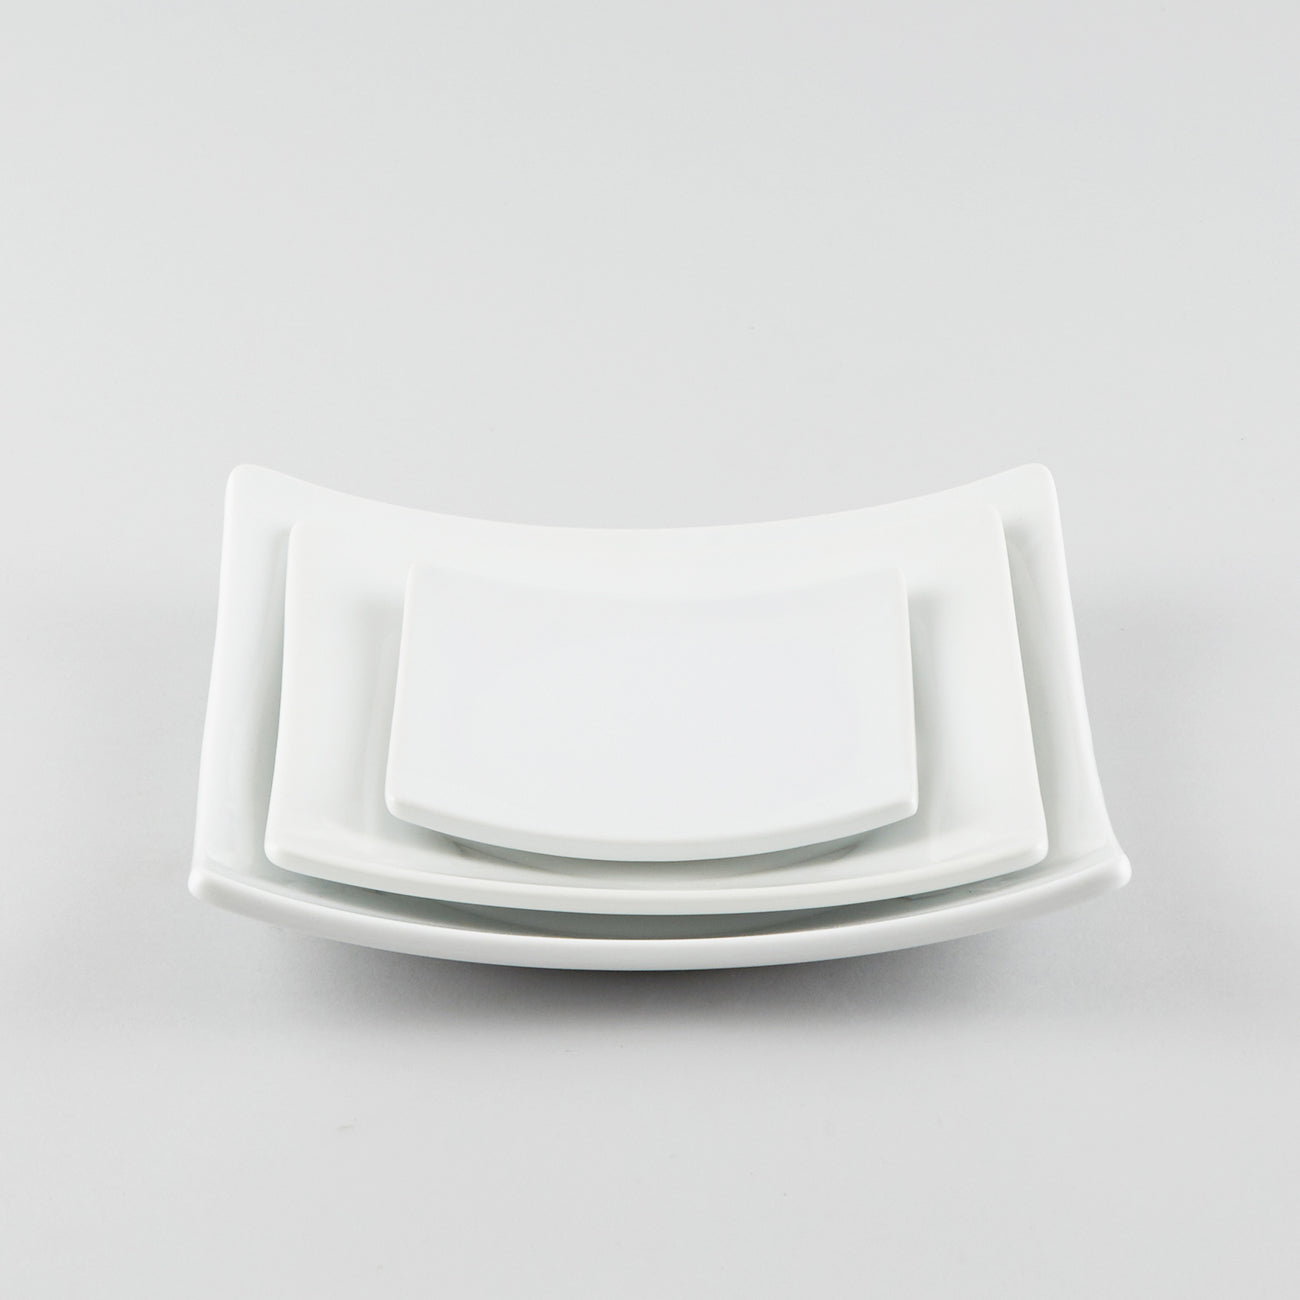 Full-Moon Sq. Plate with Raised Corners - White (M)